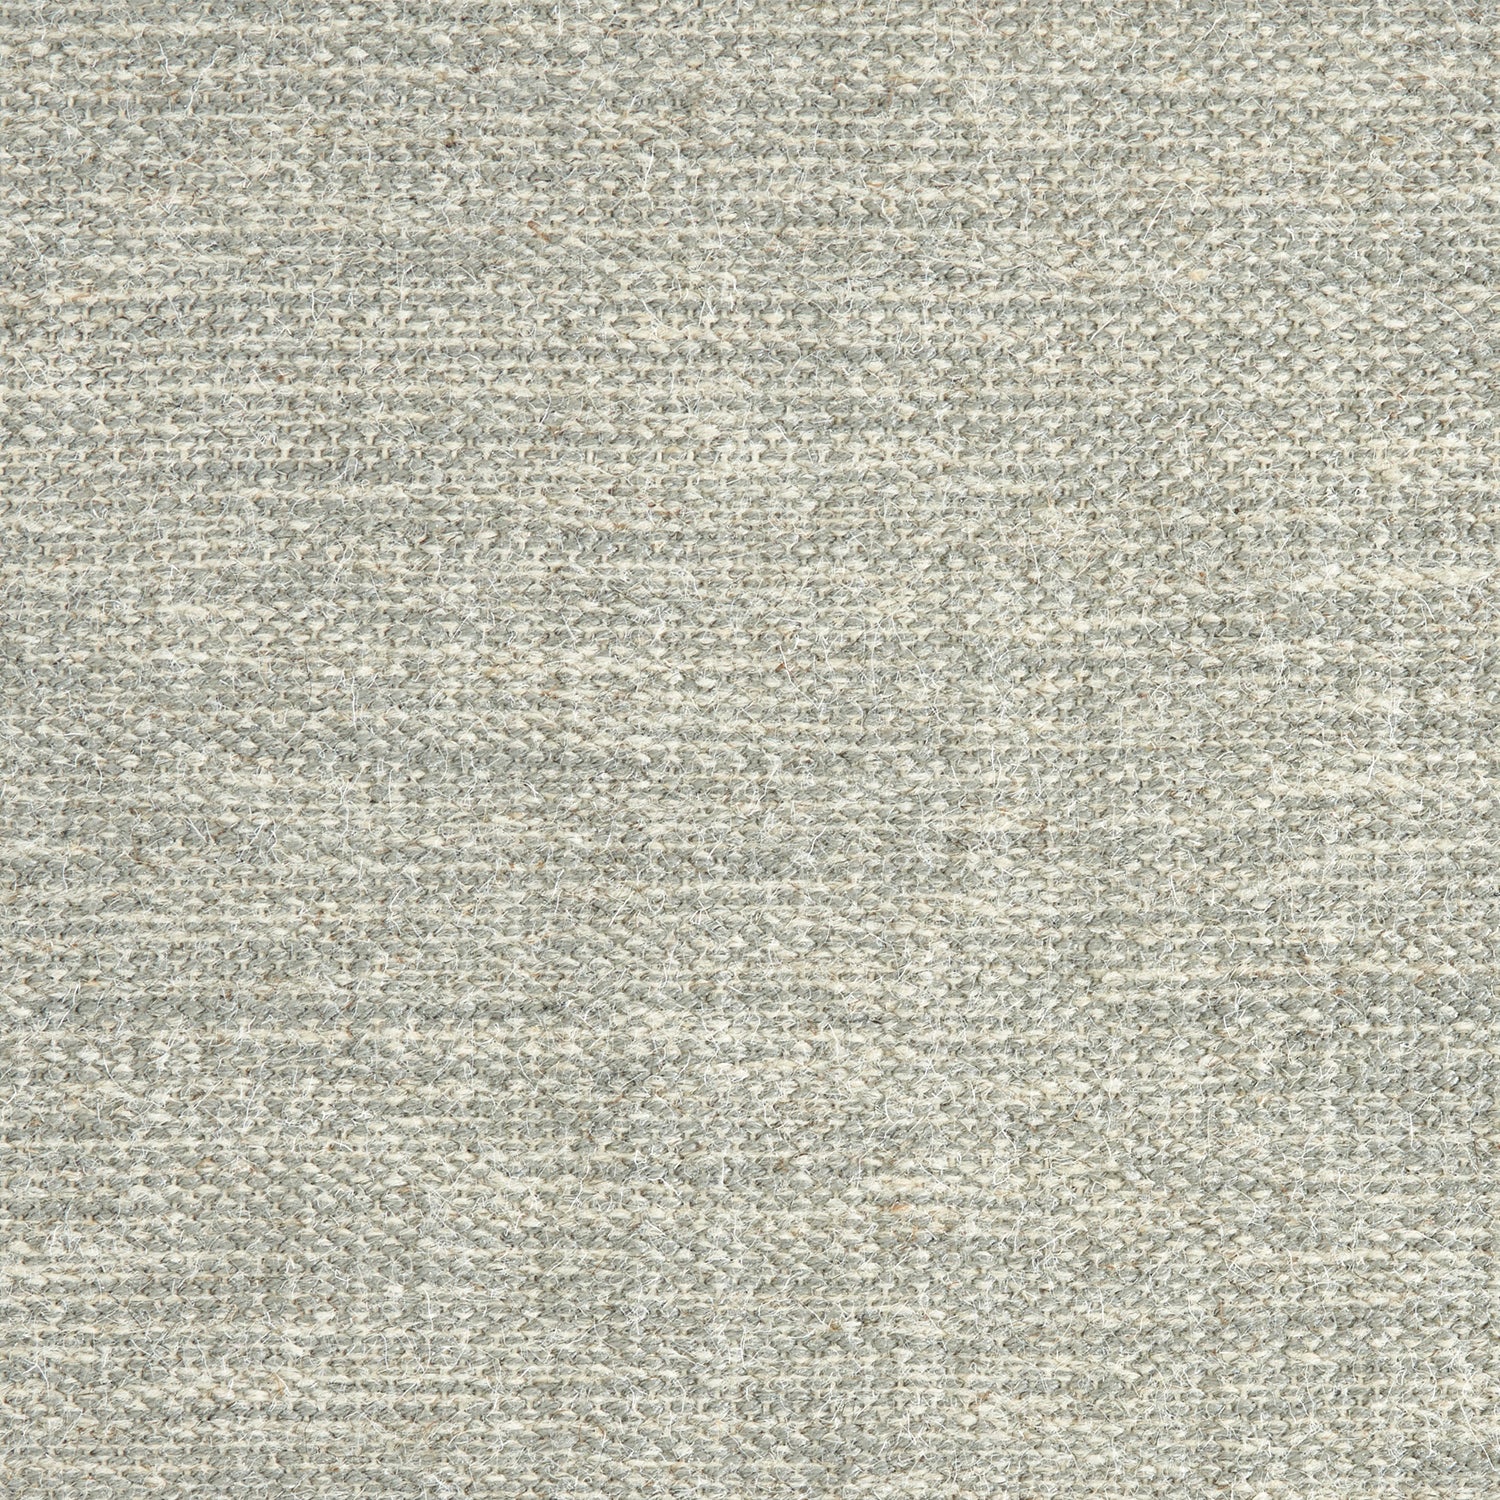 Wool-polysilk broadloom carpet swatch in mottled gray-green and tan.